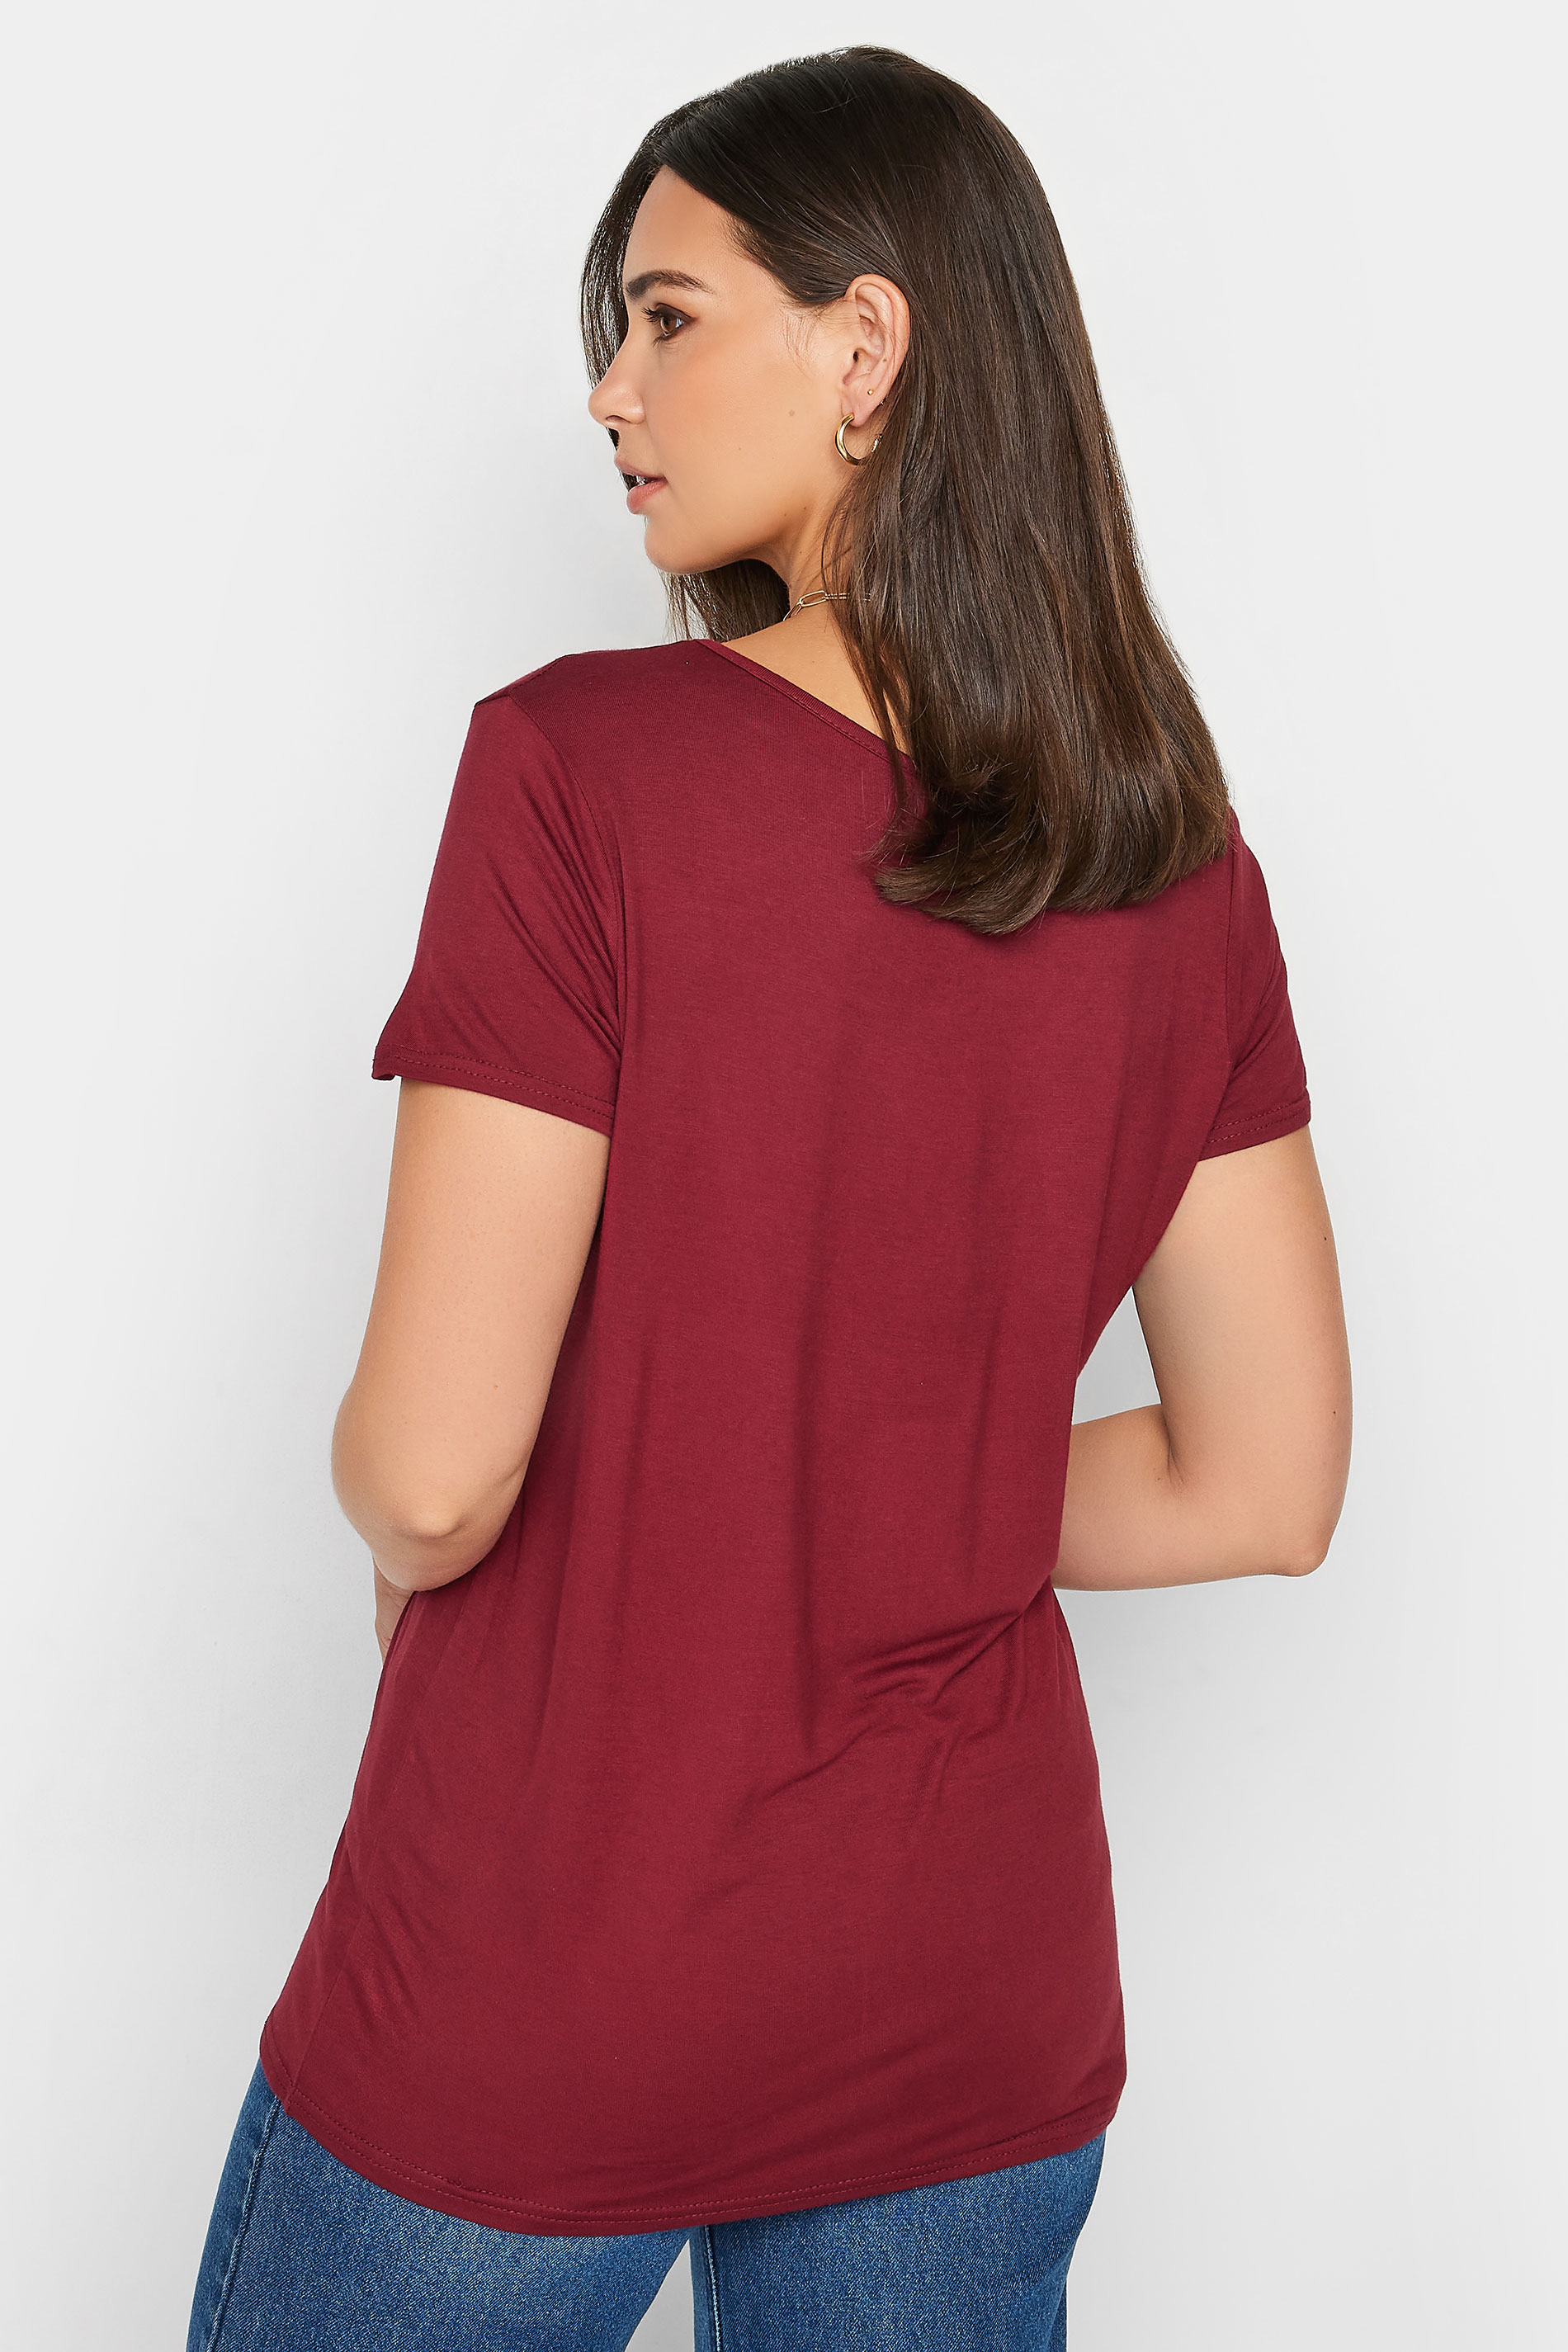 LTS Tall Women's Berry Red V-Neck T-Shirt | Long Tall Sally 3